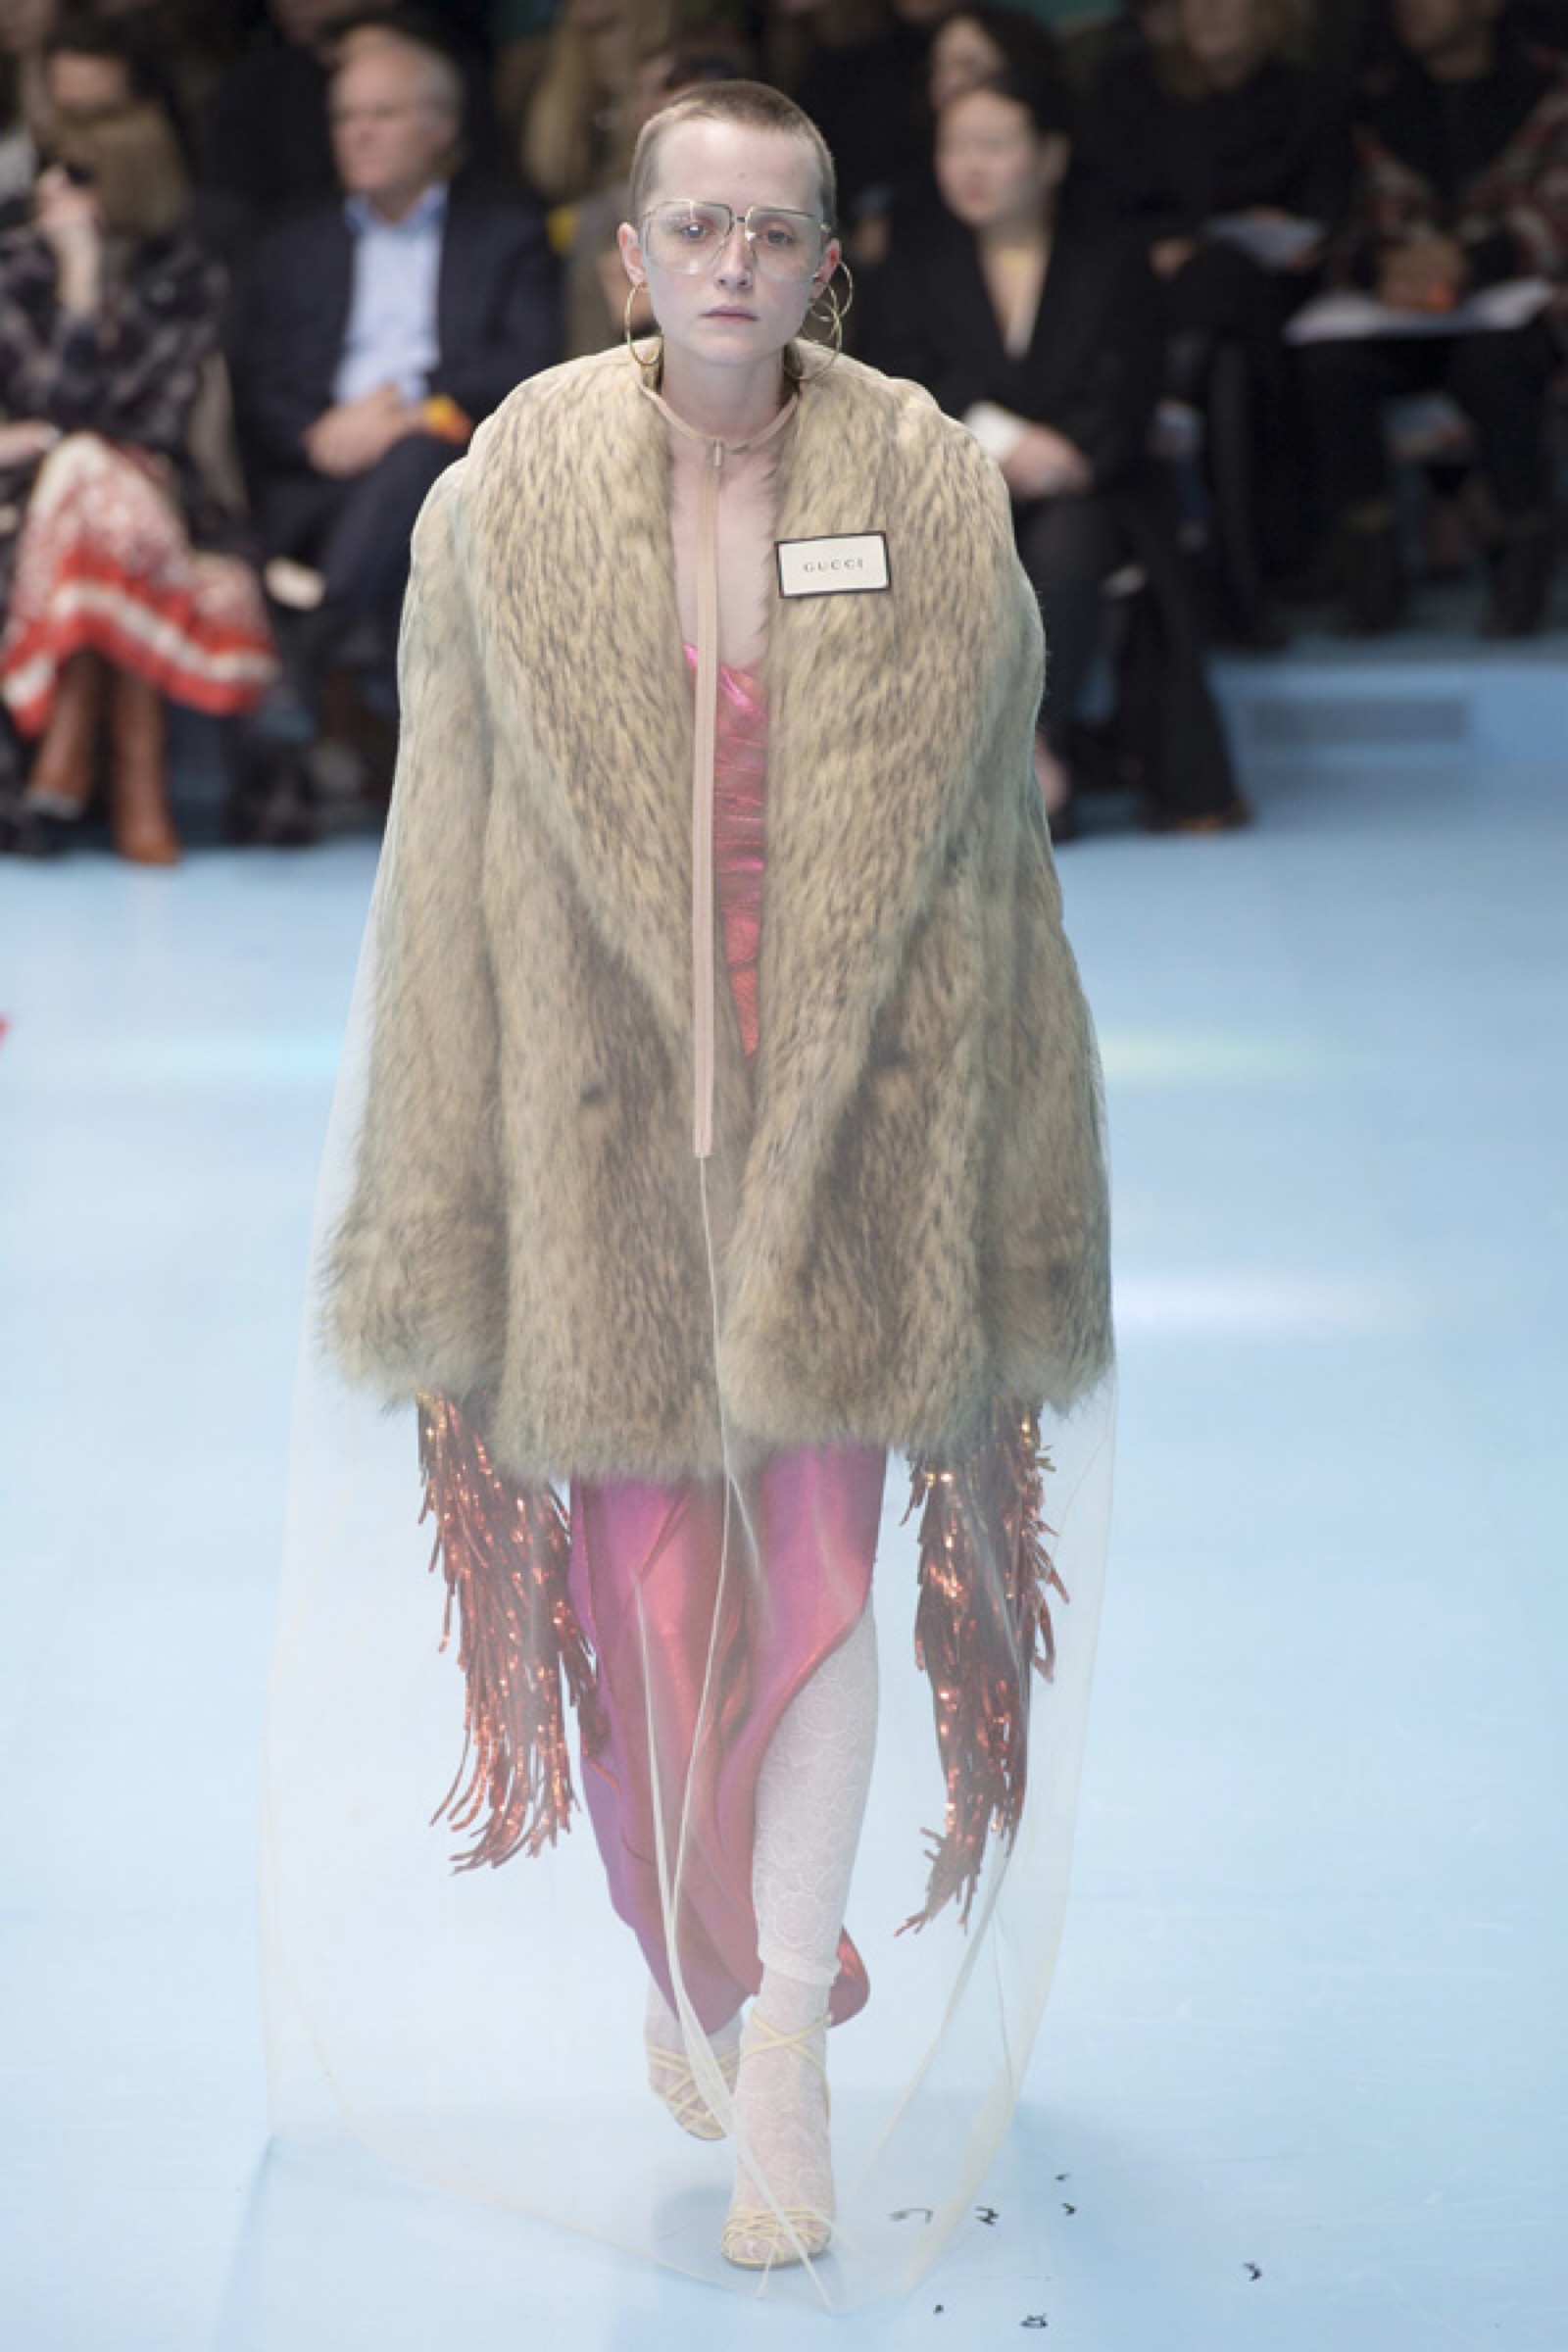 gucci(古驰)于米兰时装周发布2018秋冬系列高级成衣